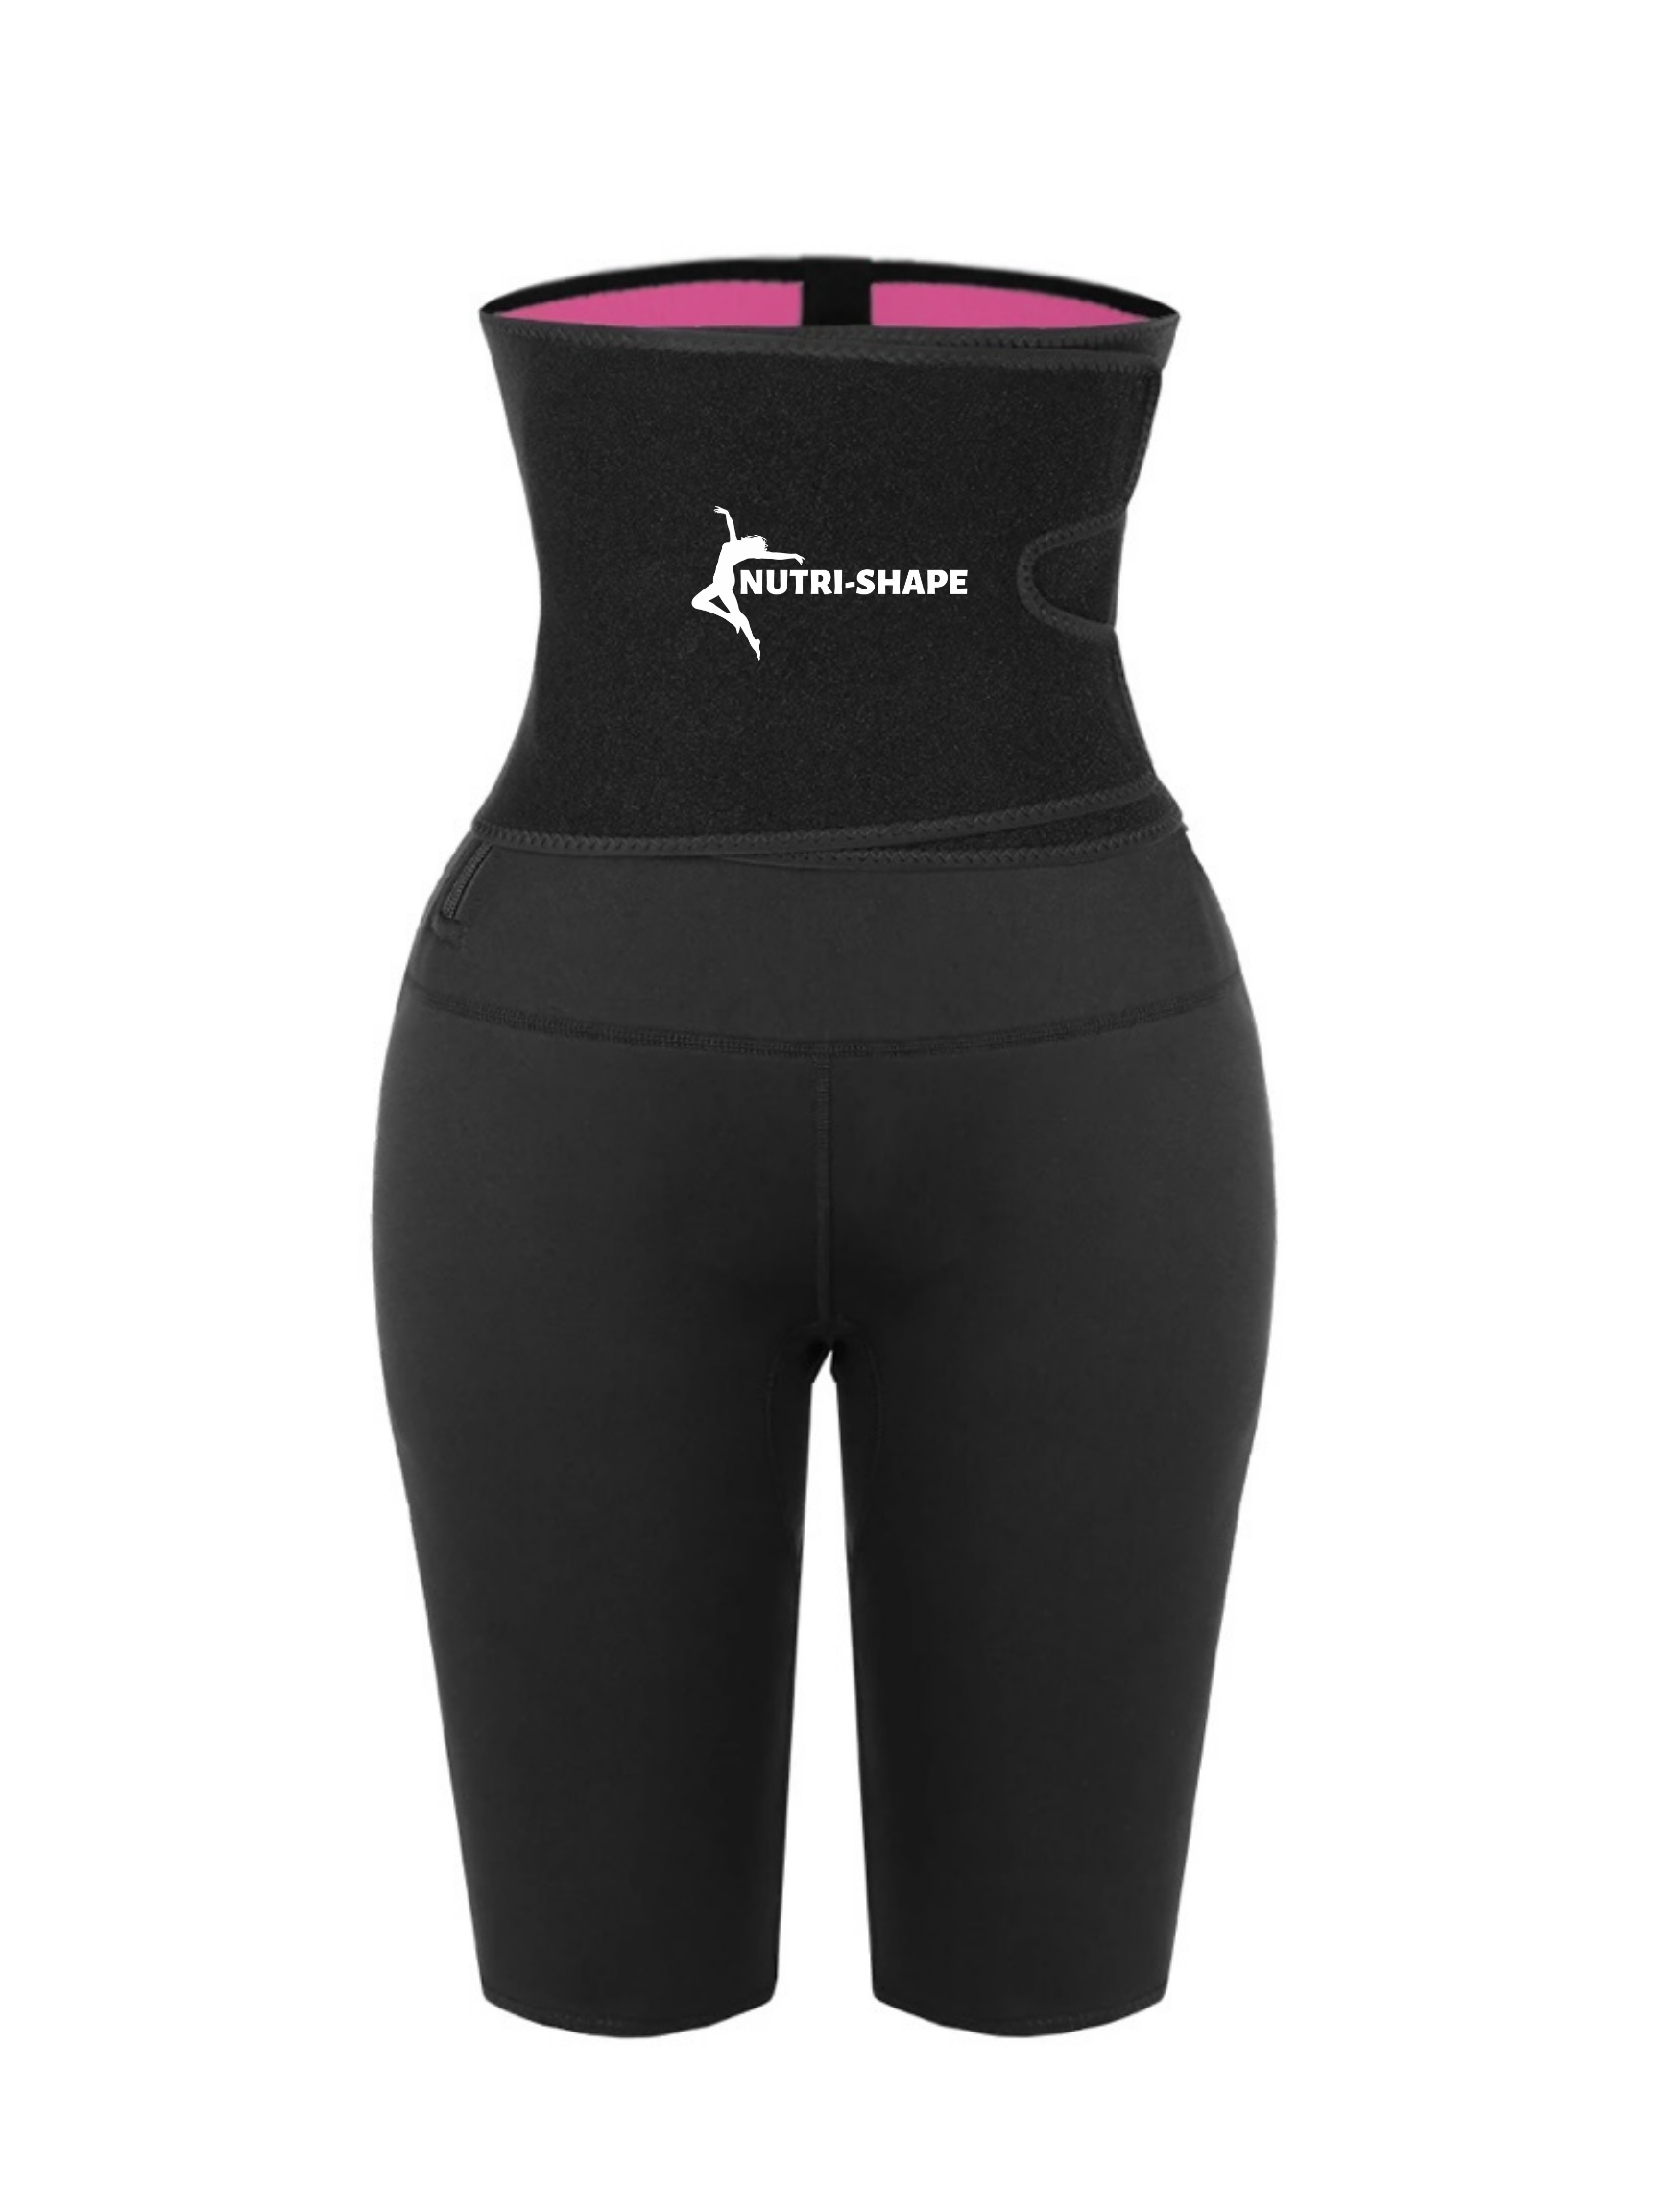 Nutri-Shed: Ultrathin Black & Pink Neoprene Shorts W/High Nutri-Shape Waist Trainer - Nutri Shed Supplement Lab 